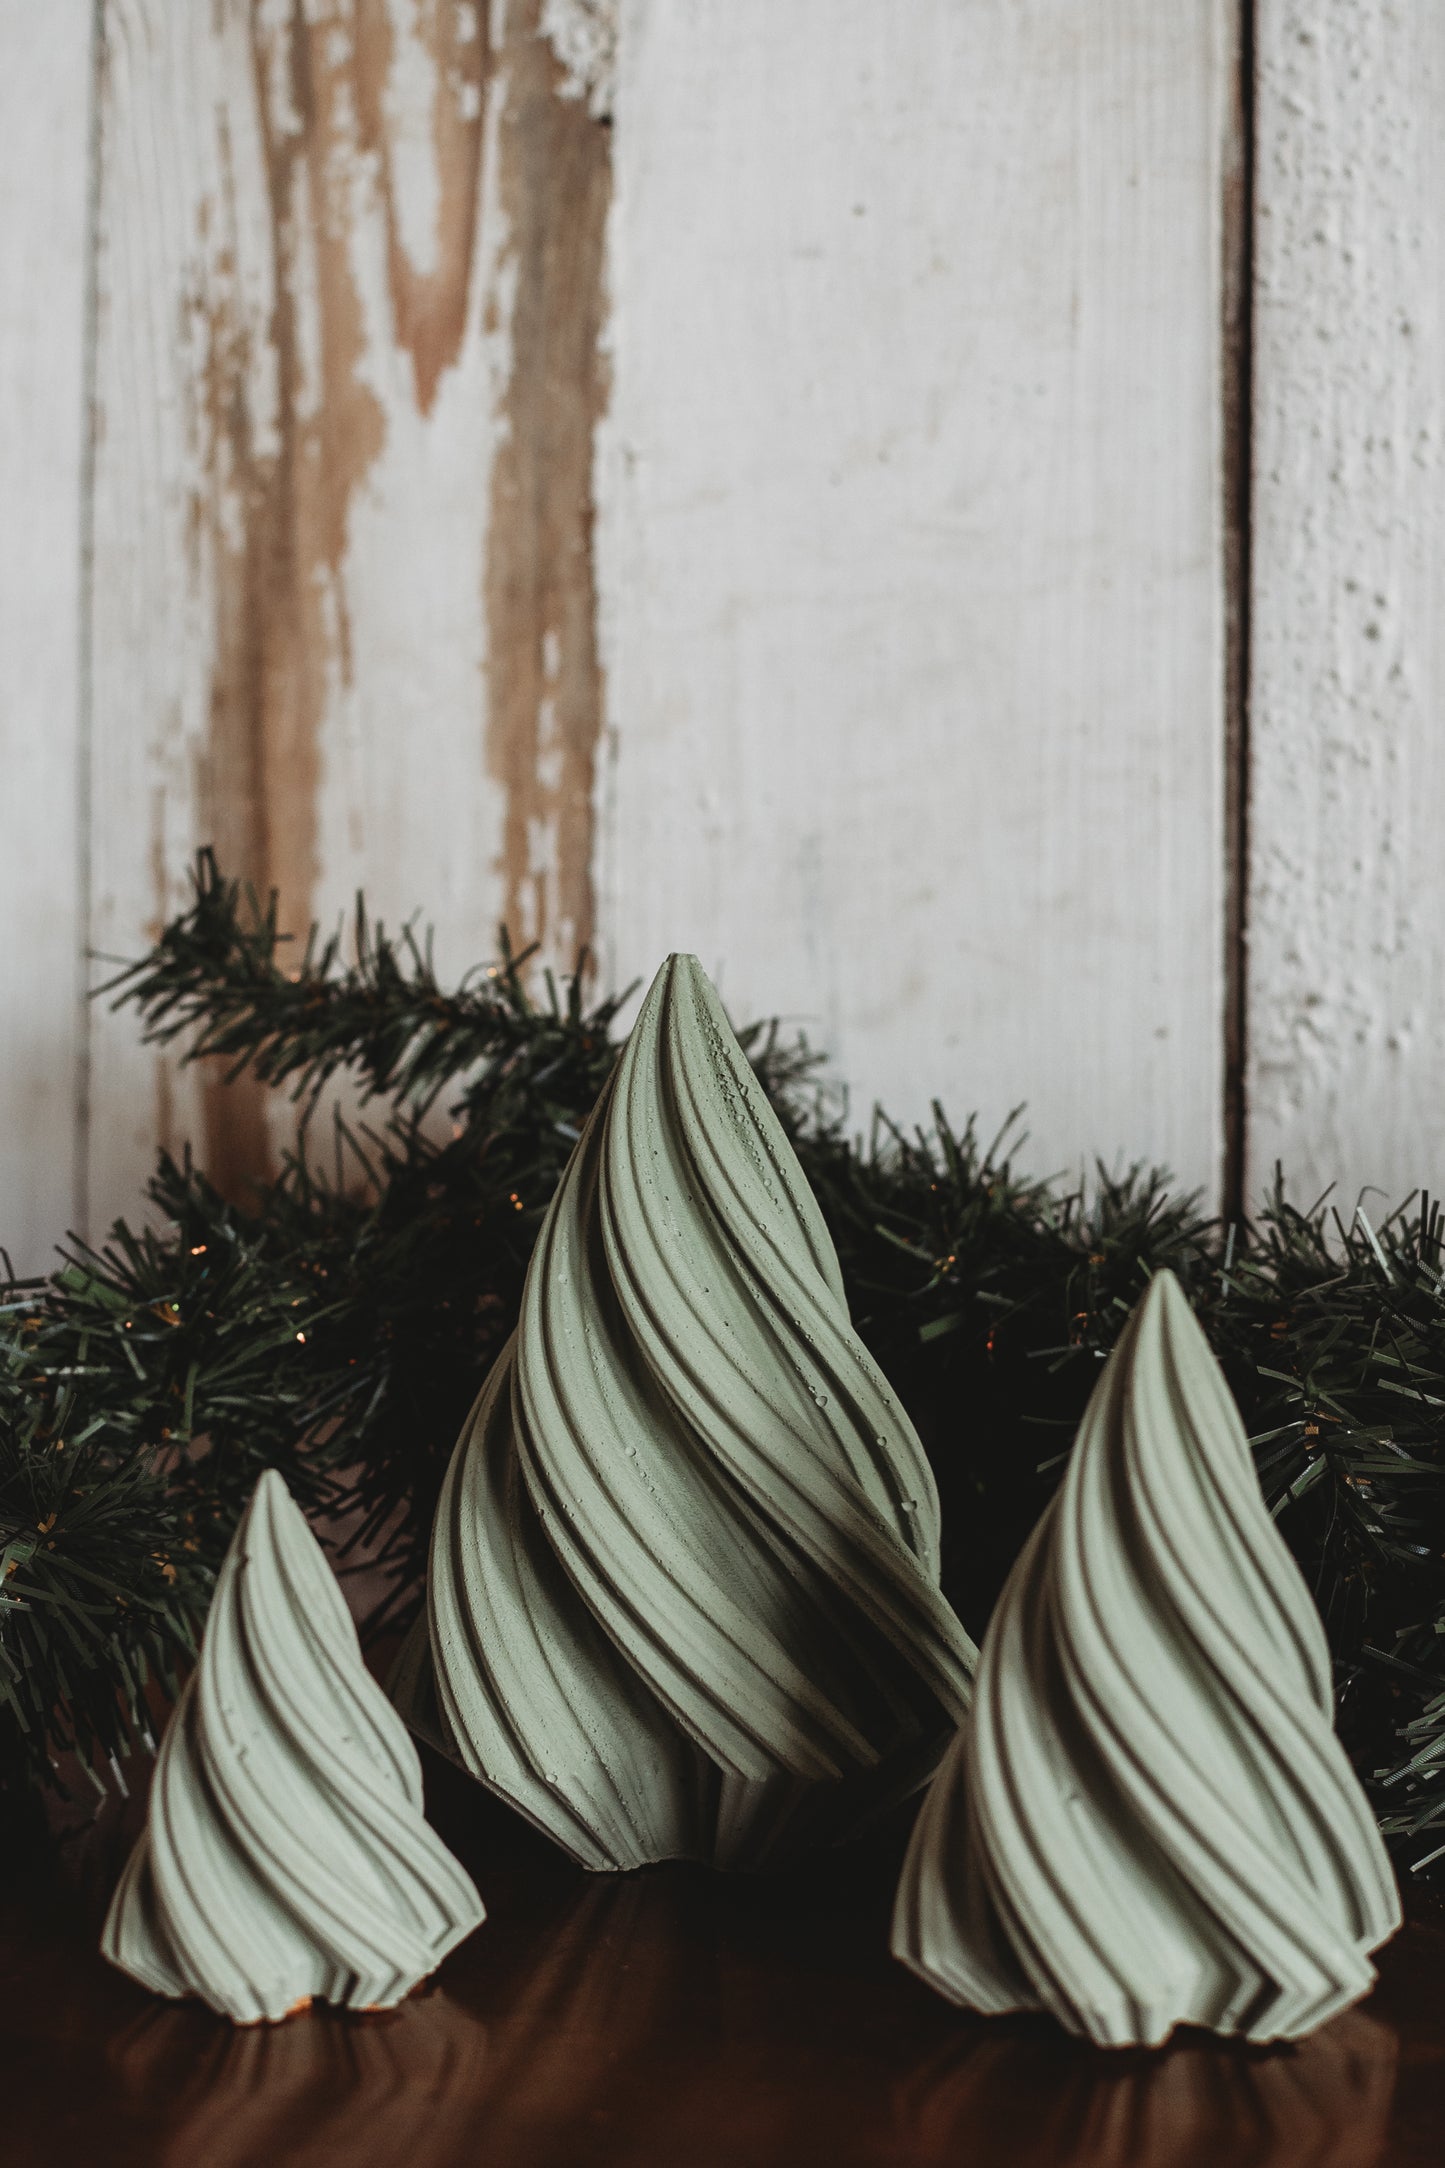 Set of 3 Holiday Trees | Handmade Christmas Decor | Concrete Spiral Trees